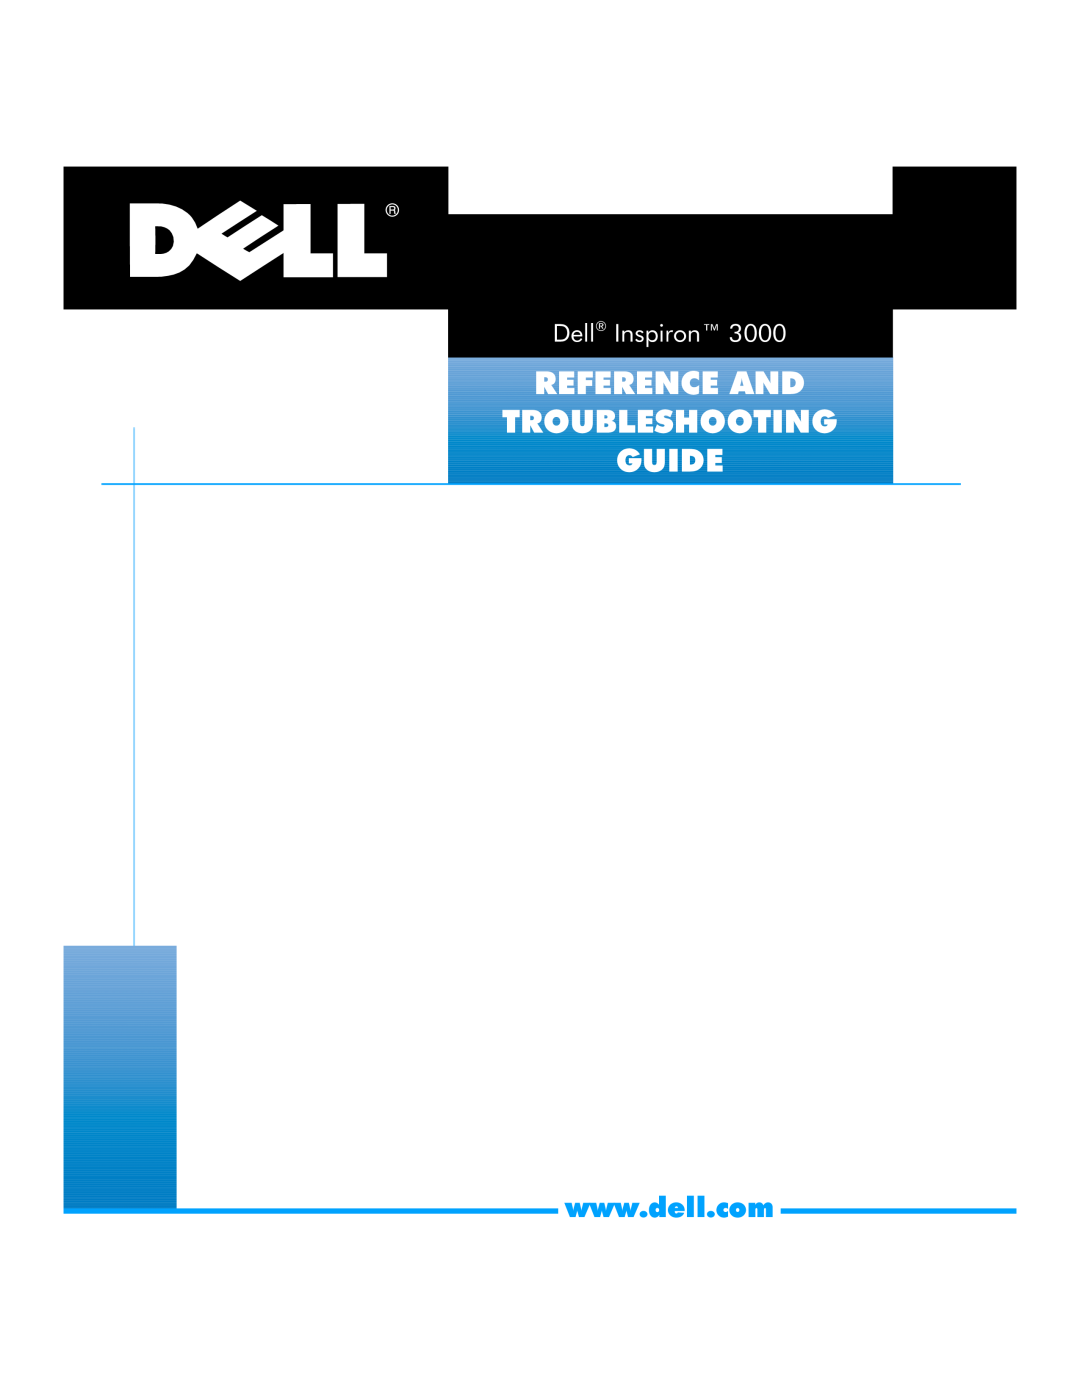 Dell 3000 manual 551&$1 7528%/6+227,1, Zzzghoofrp, HOOä,QVSLURQŒ 